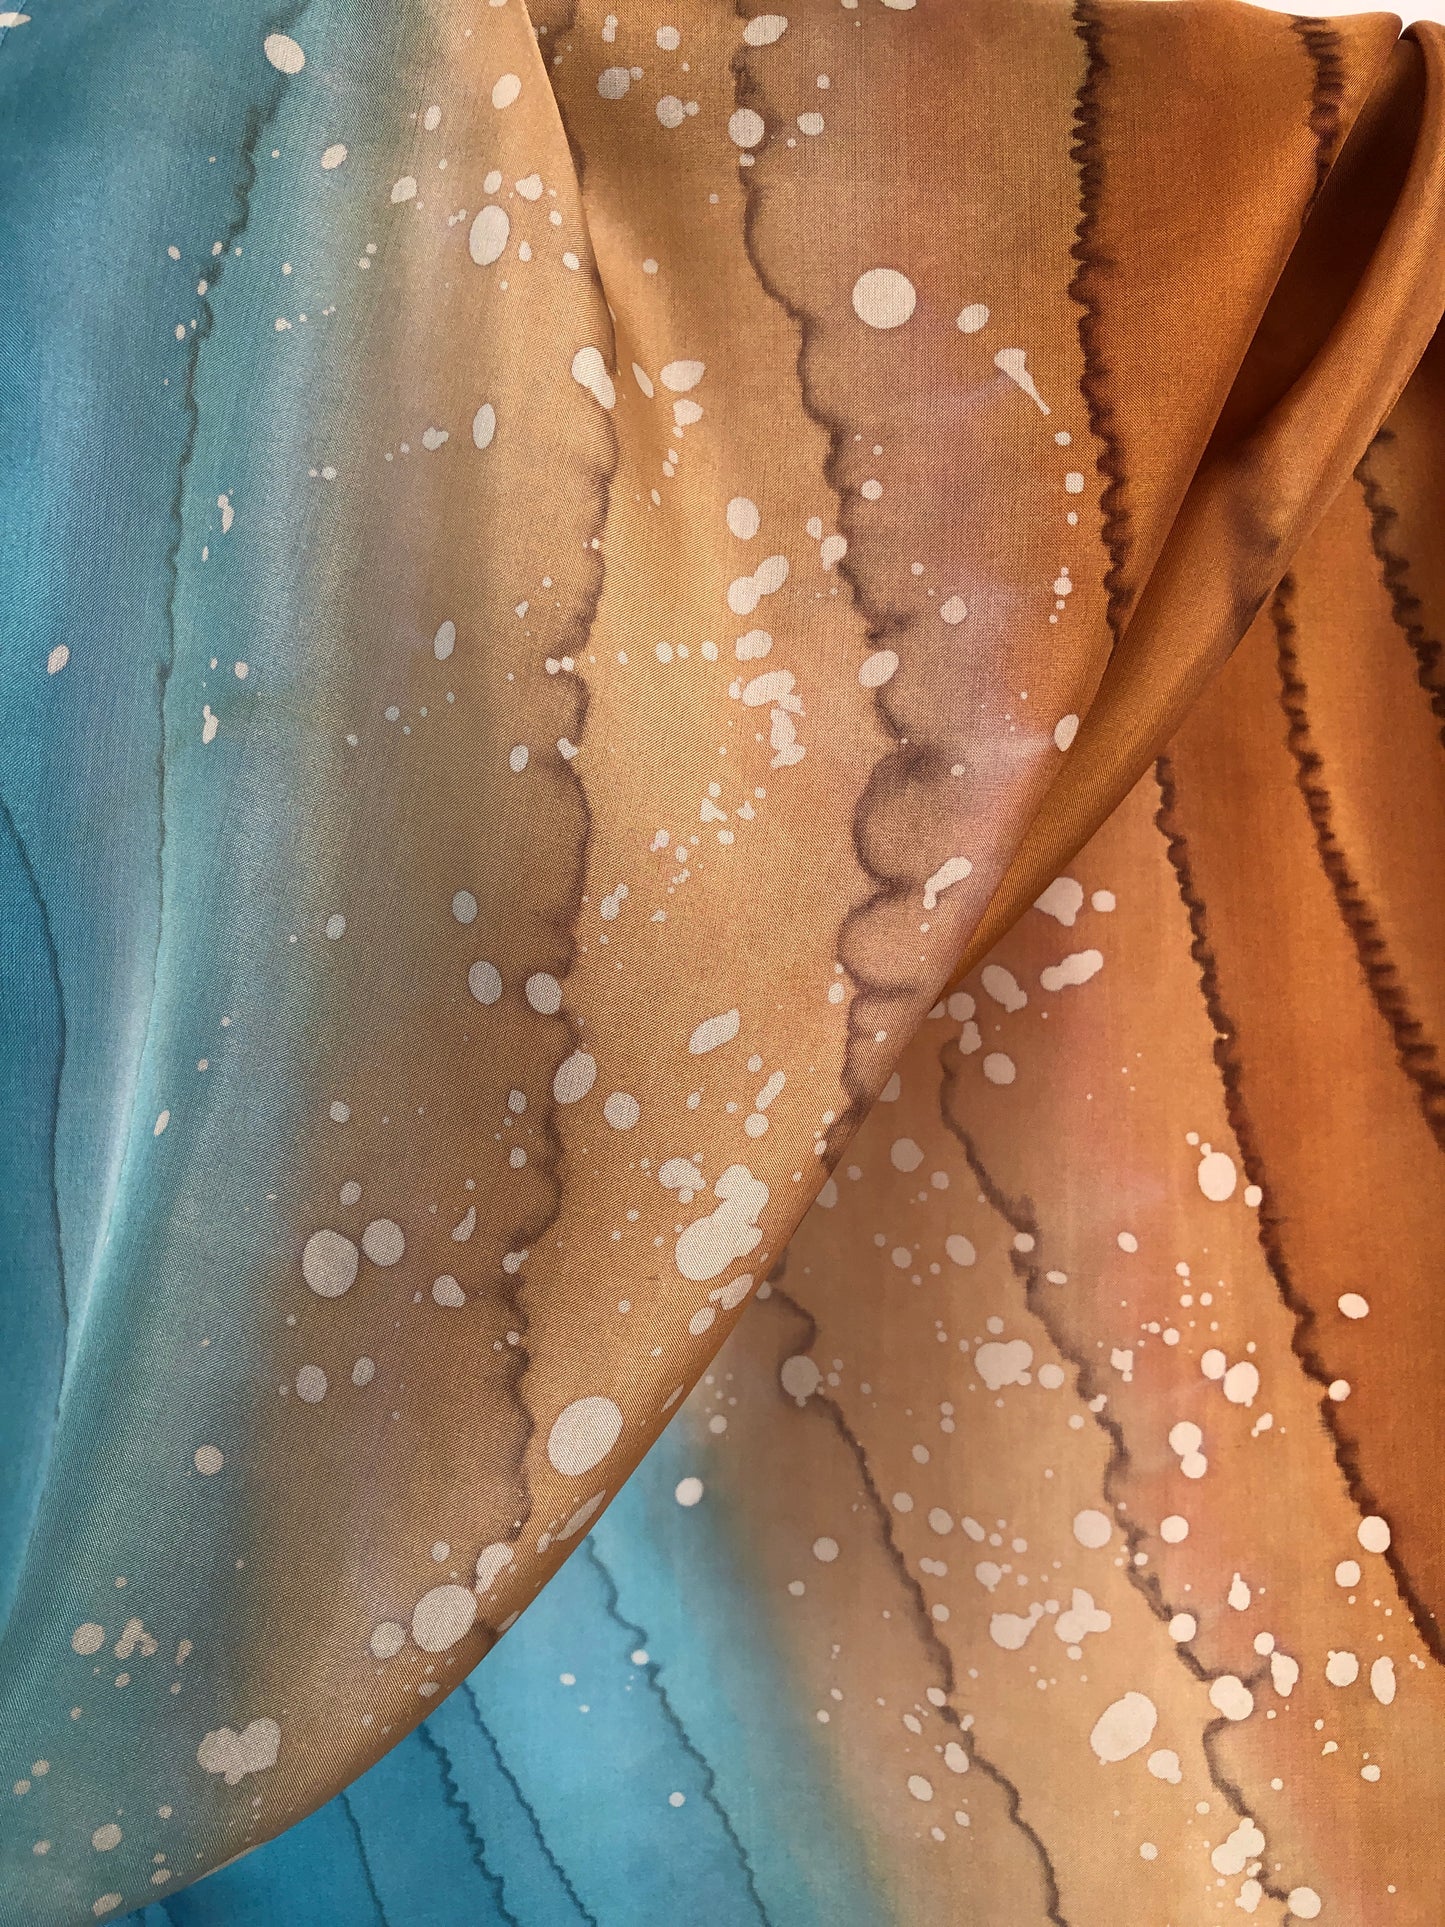 "Surf Zone" - Hand-dyed Silk Scarf - $125